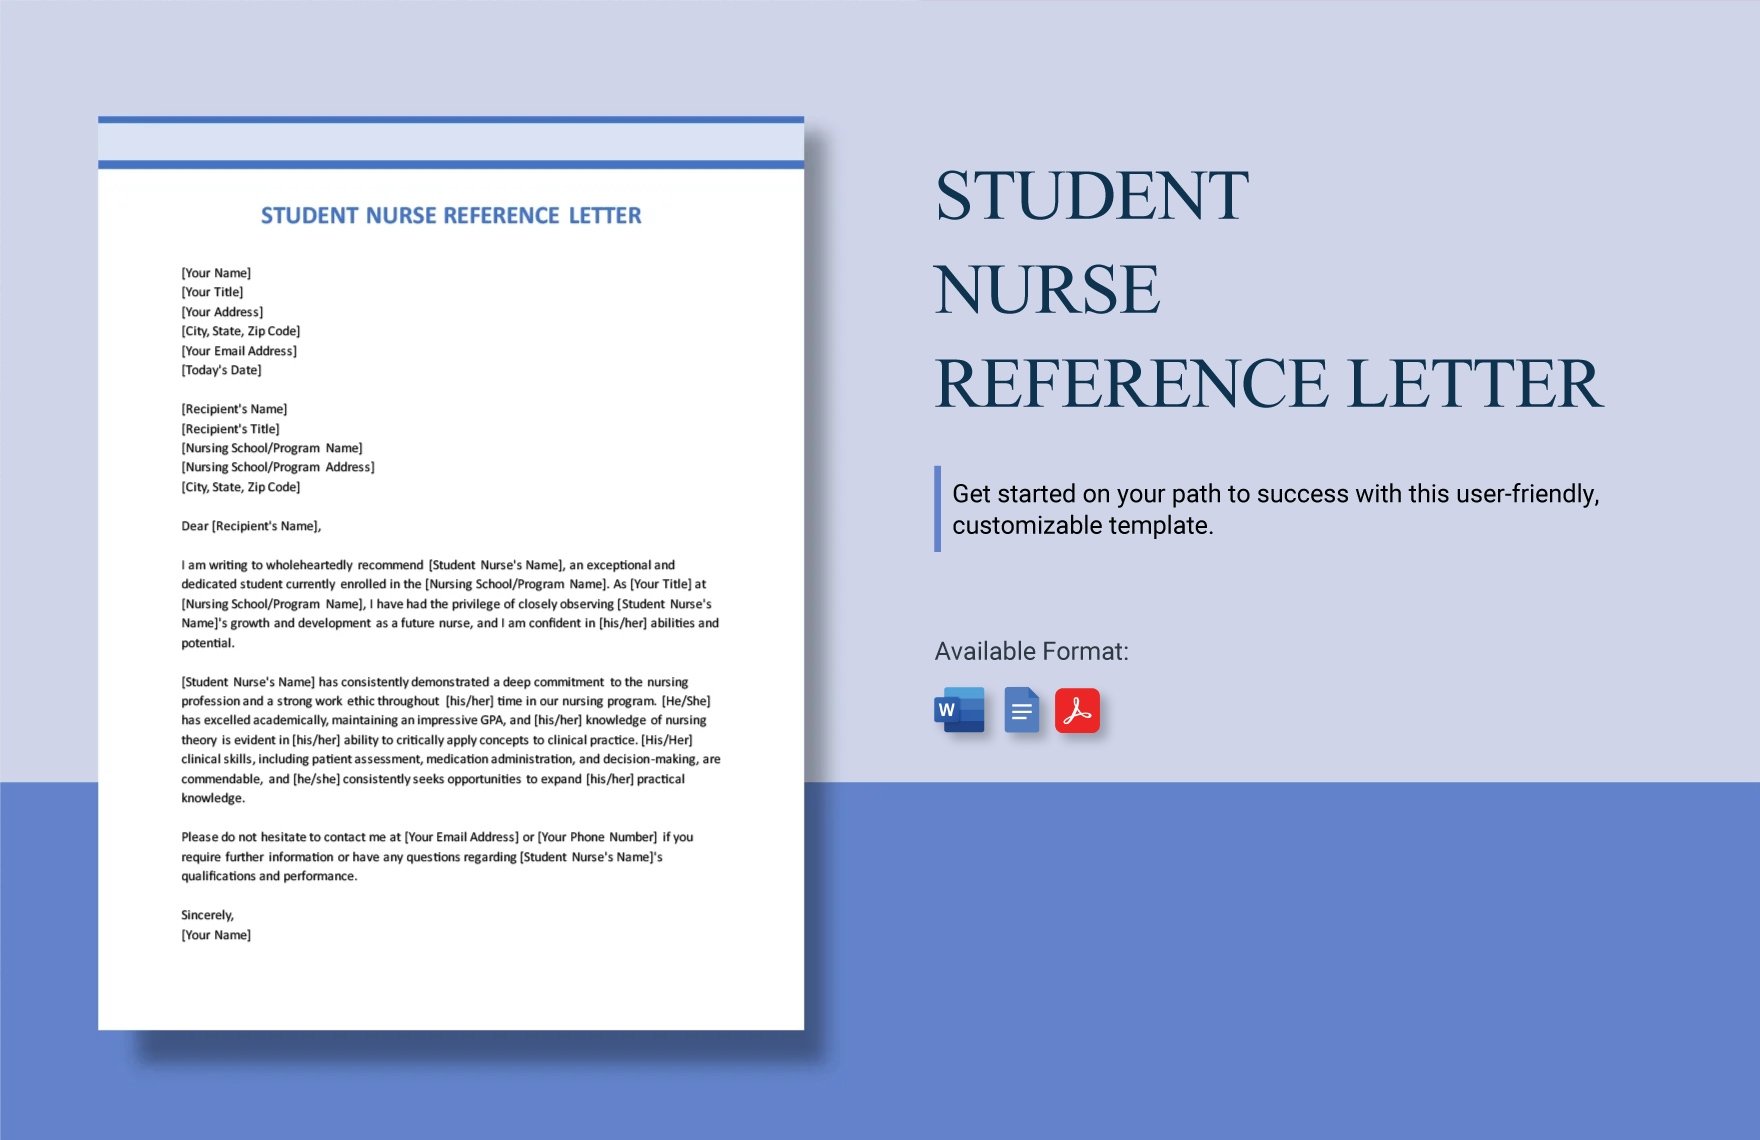 Student Nurse Reference Letter in Word, Google Docs, PDF